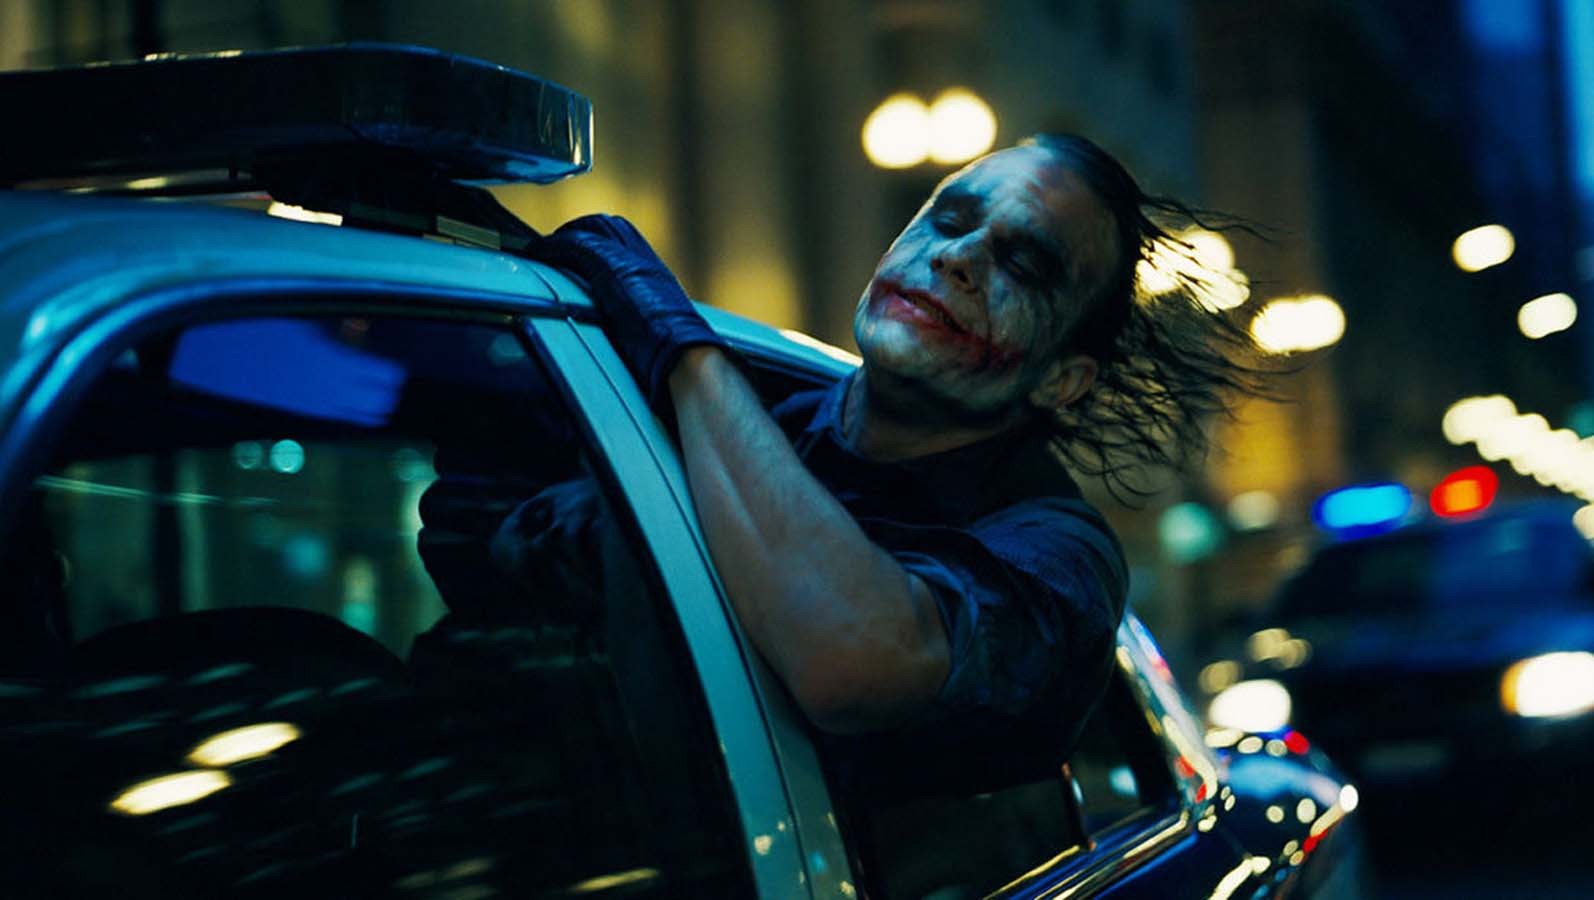 People 1594x900 Joker Heath Ledger The Dark Knight police cars car villains Batman movies men film stills